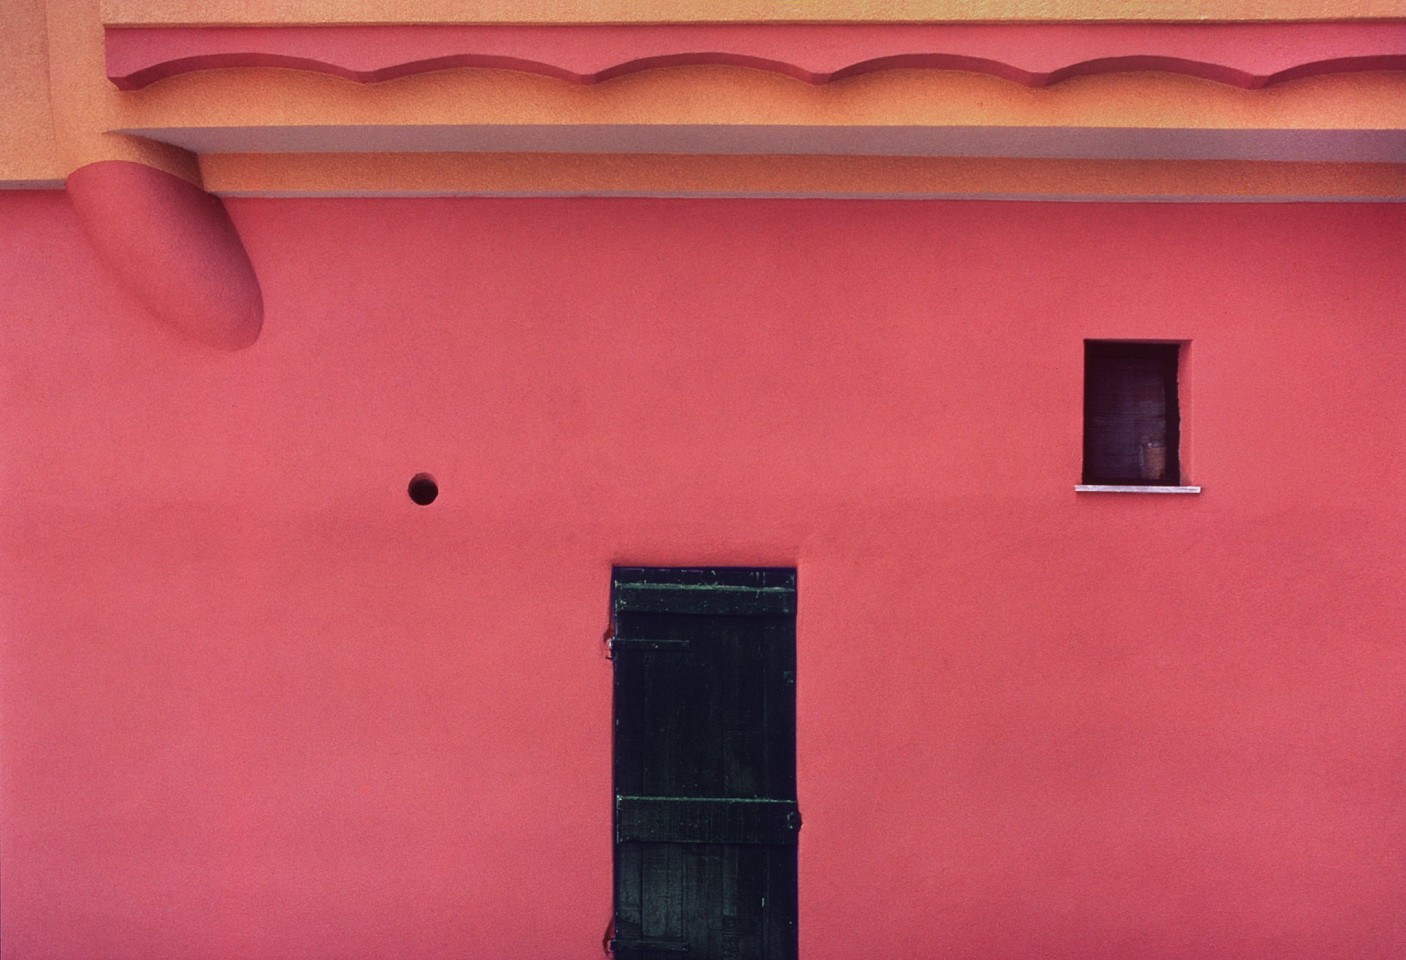 Jeffrey Becom, Pink Wall, Monterosso, Italy
1990, Ilfochrome print